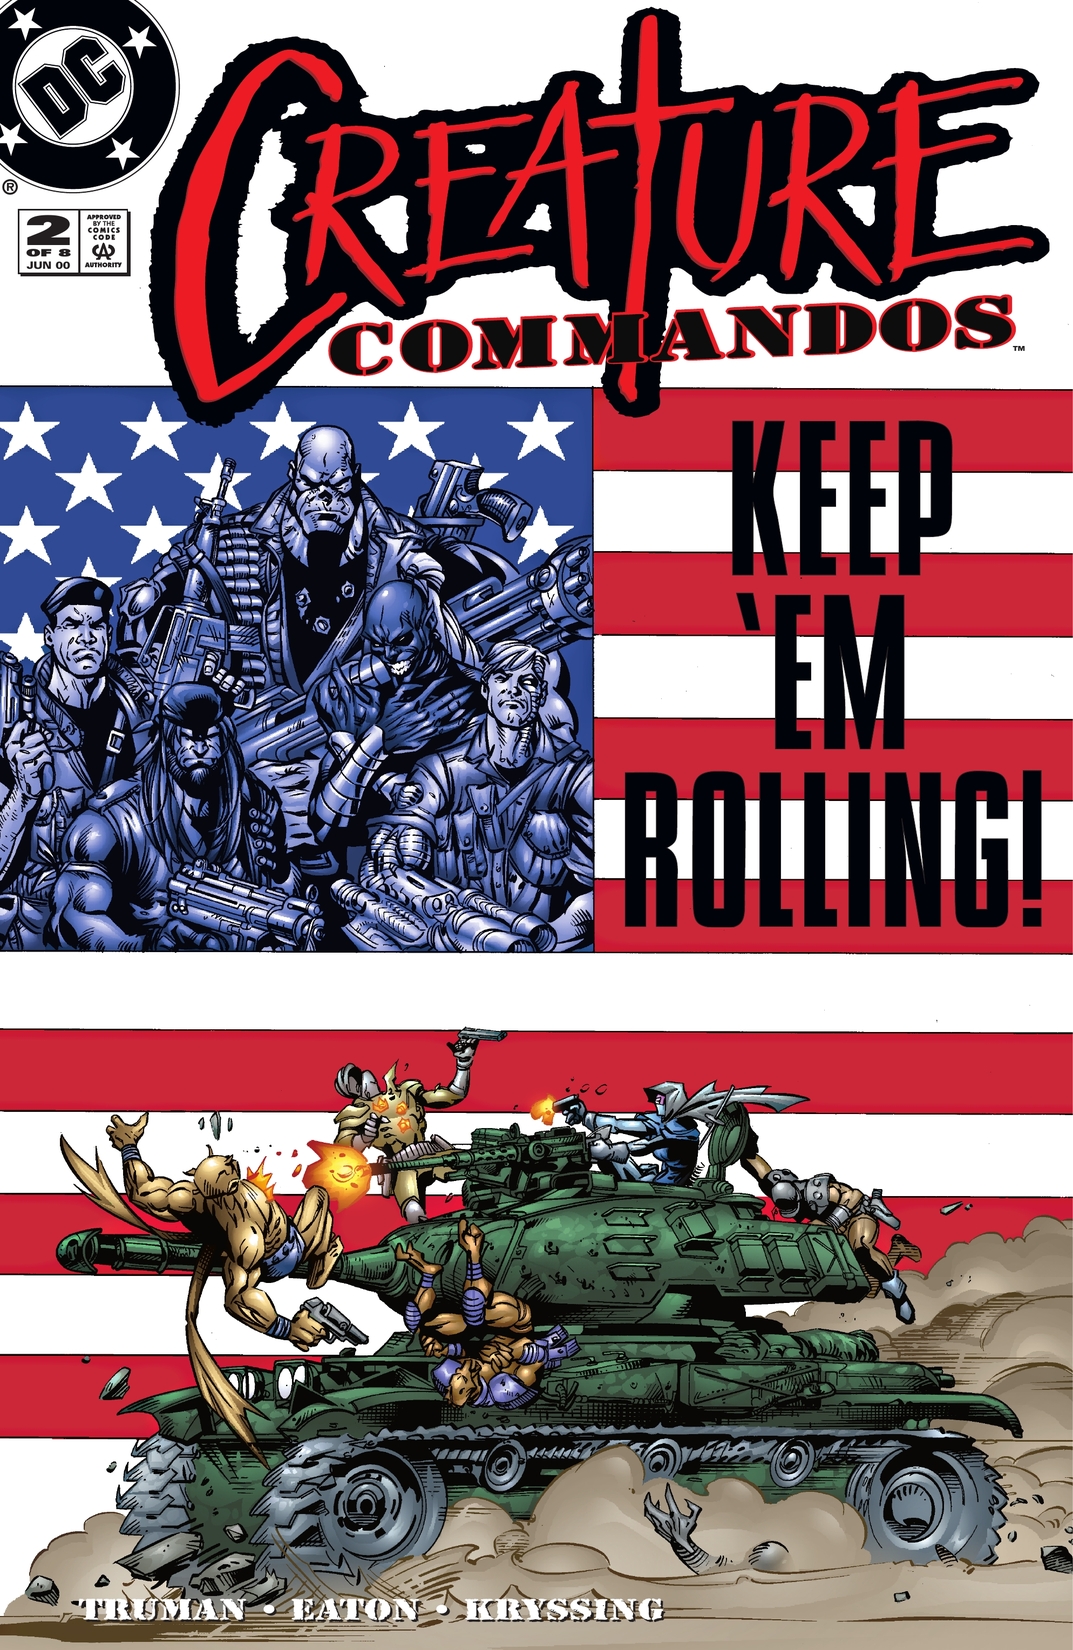 Creature Commandos #2 preview images